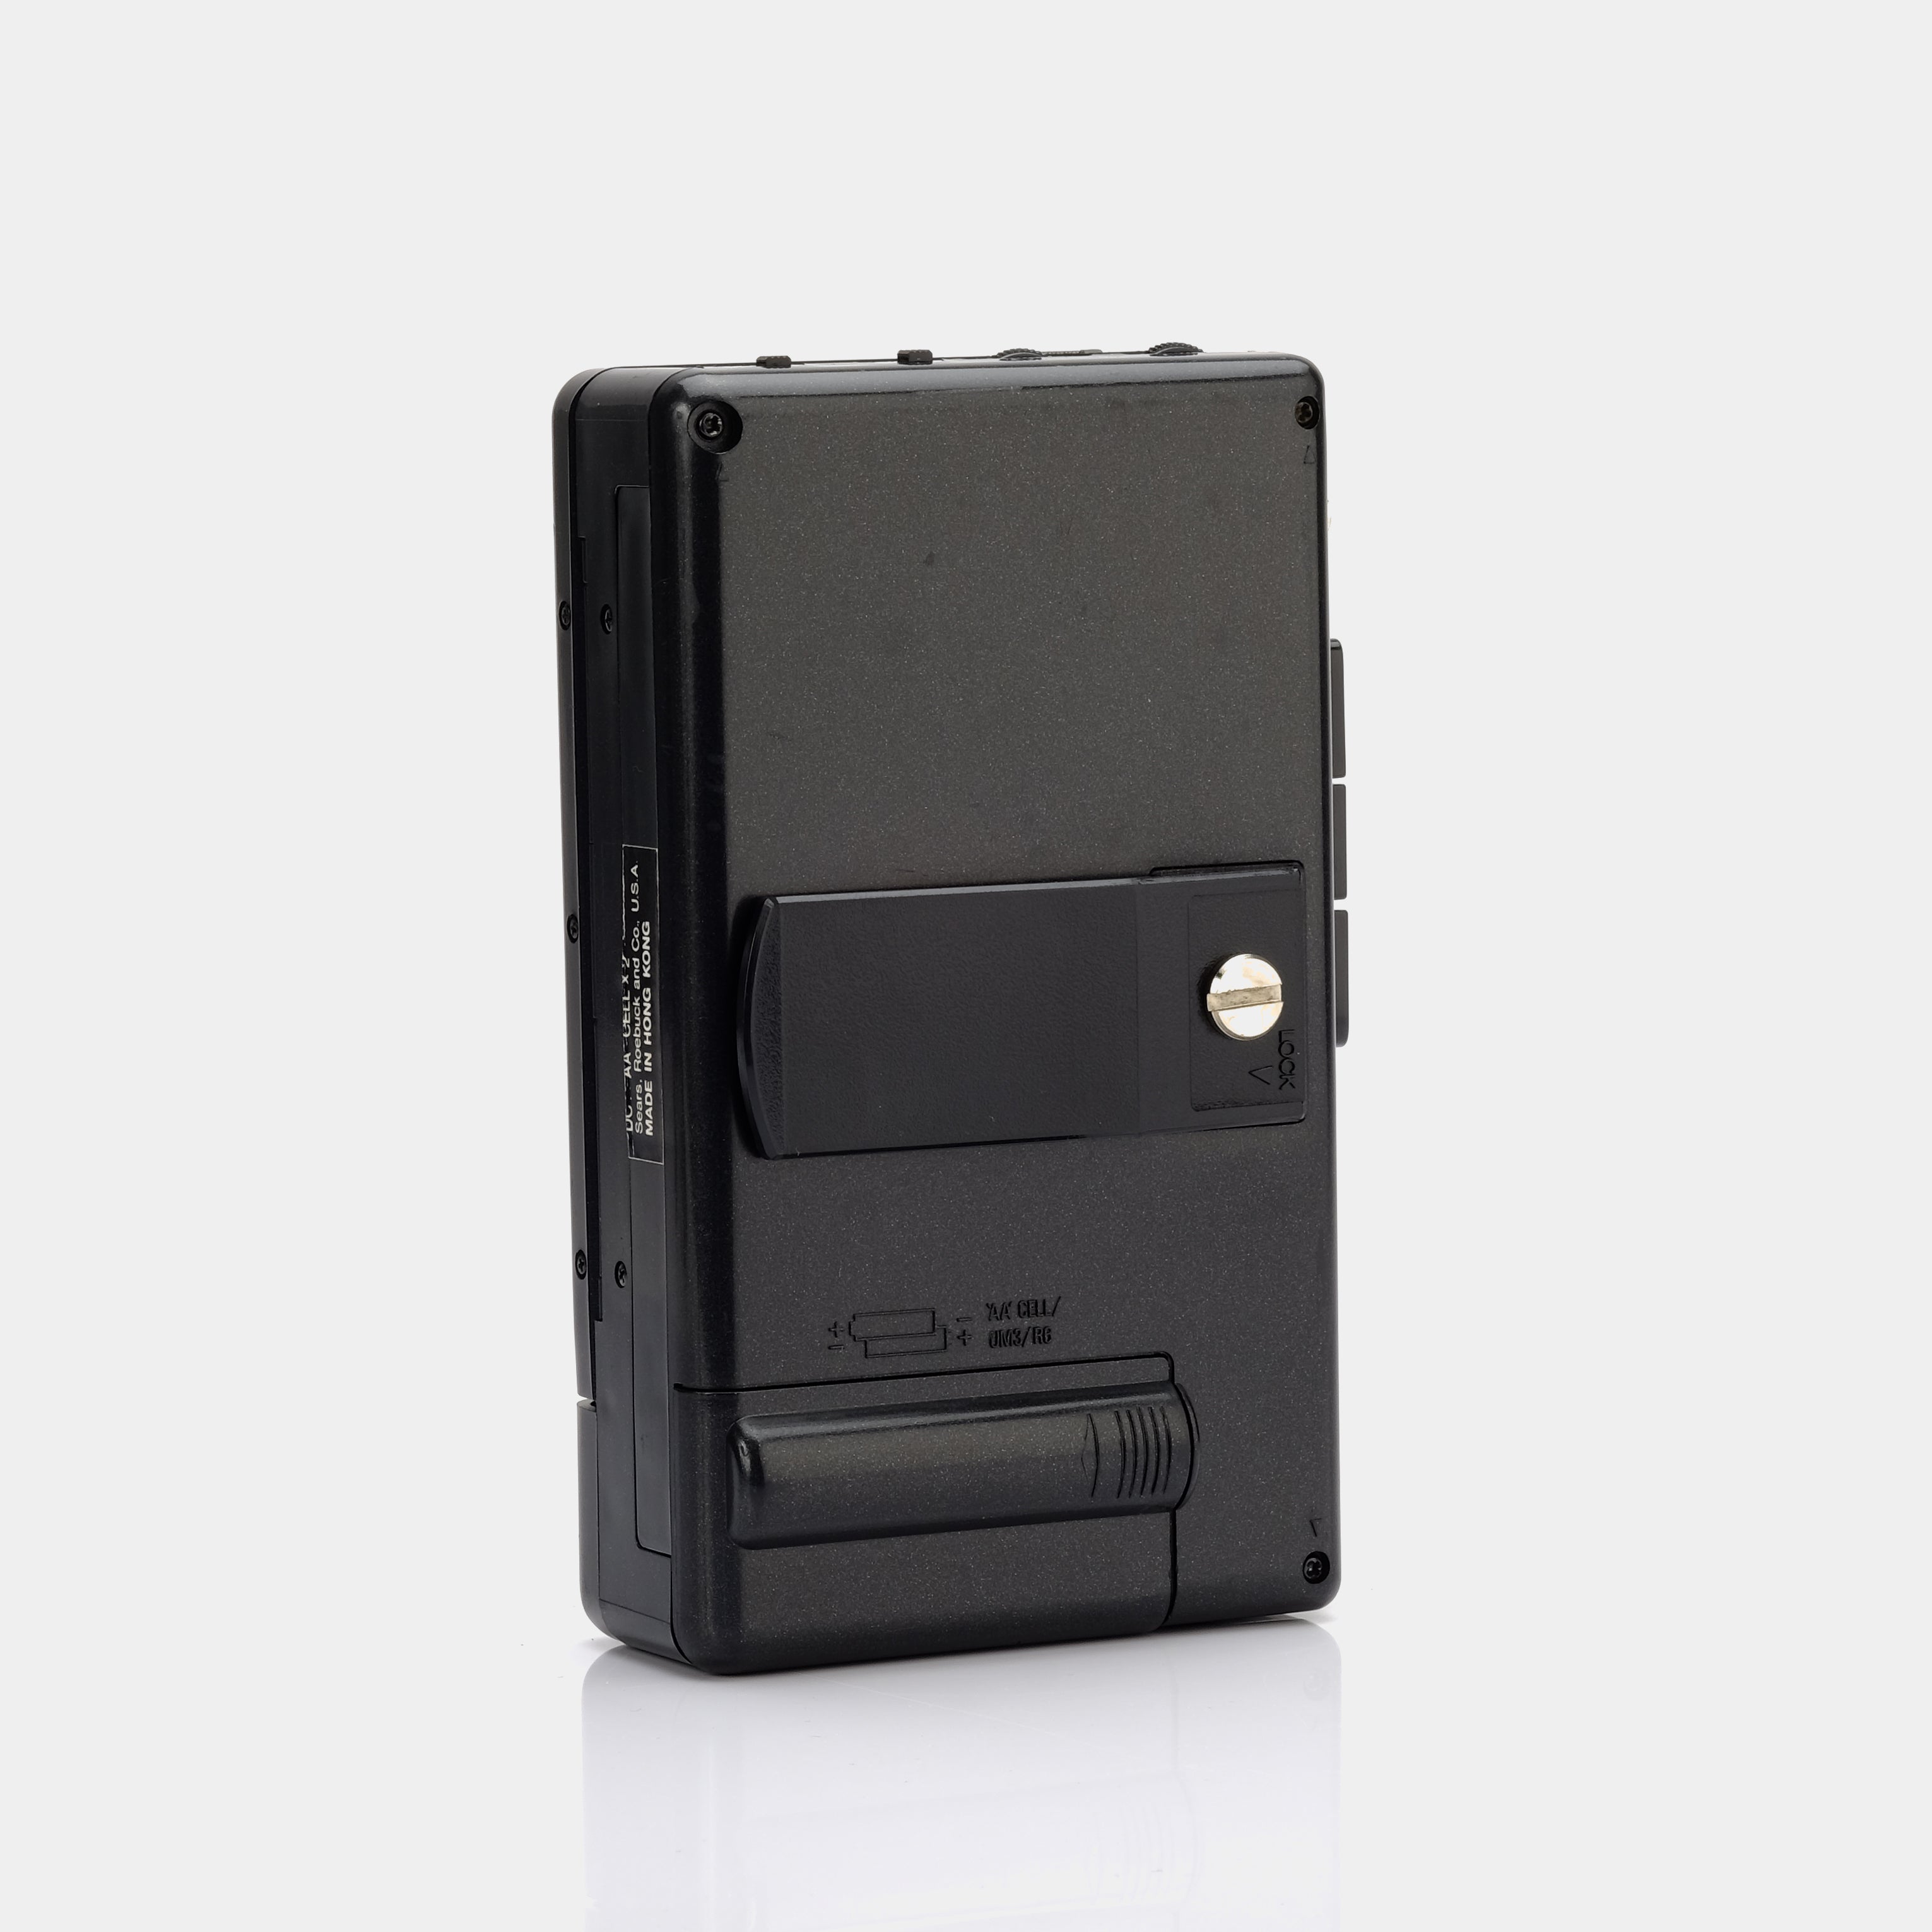 Sears Roebuck & Co LXI Series Autoreverse Portable Cassette Player